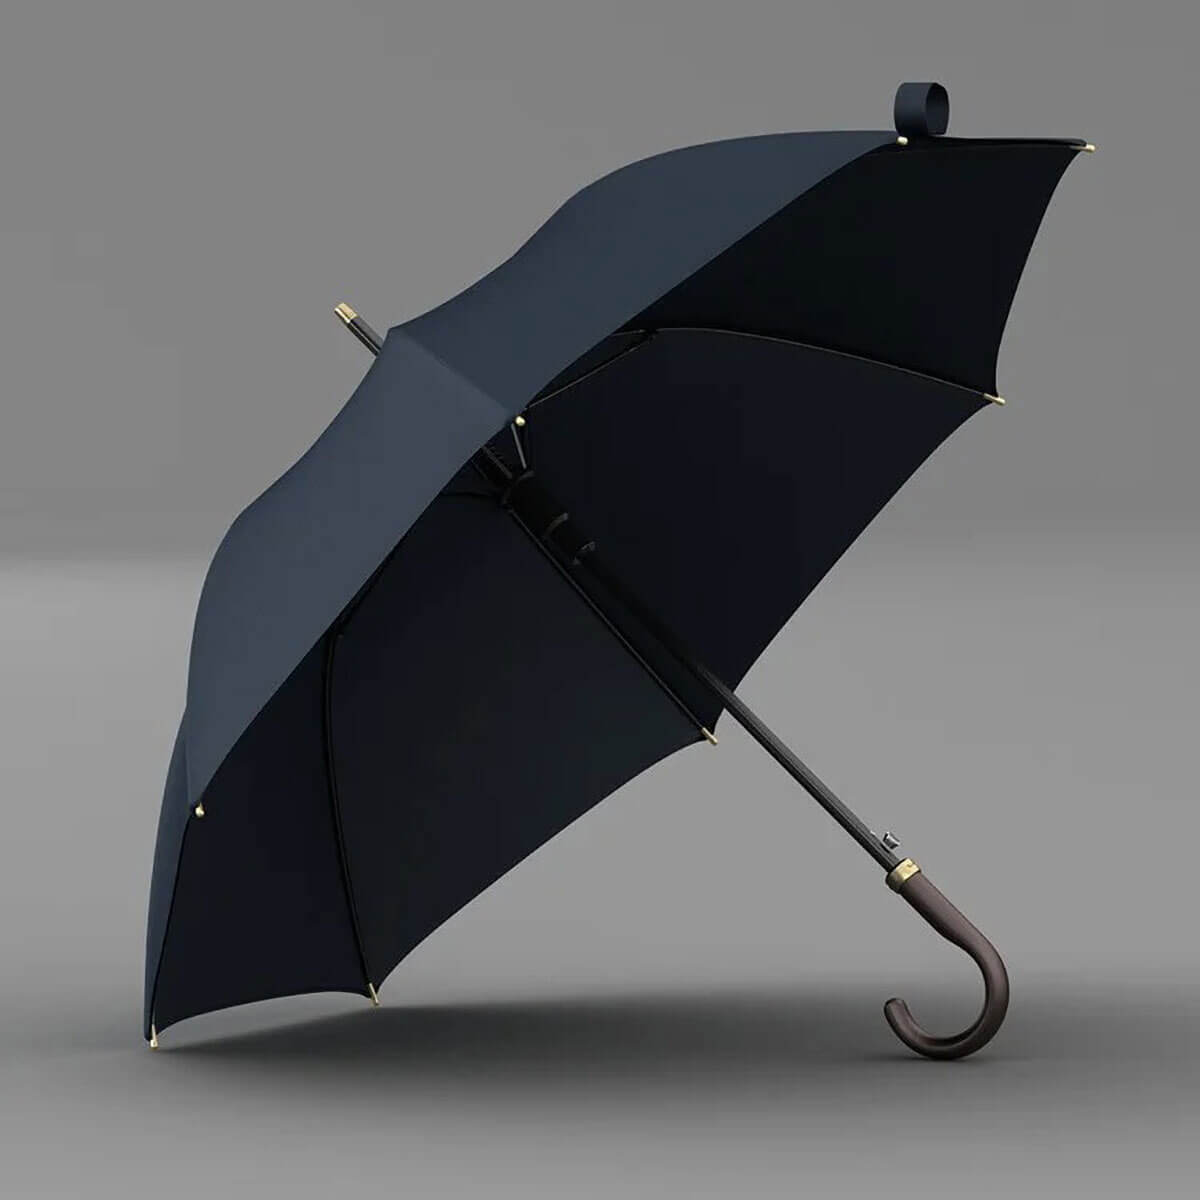 Enchanted Elegance Long Umbrella open under rainy sky